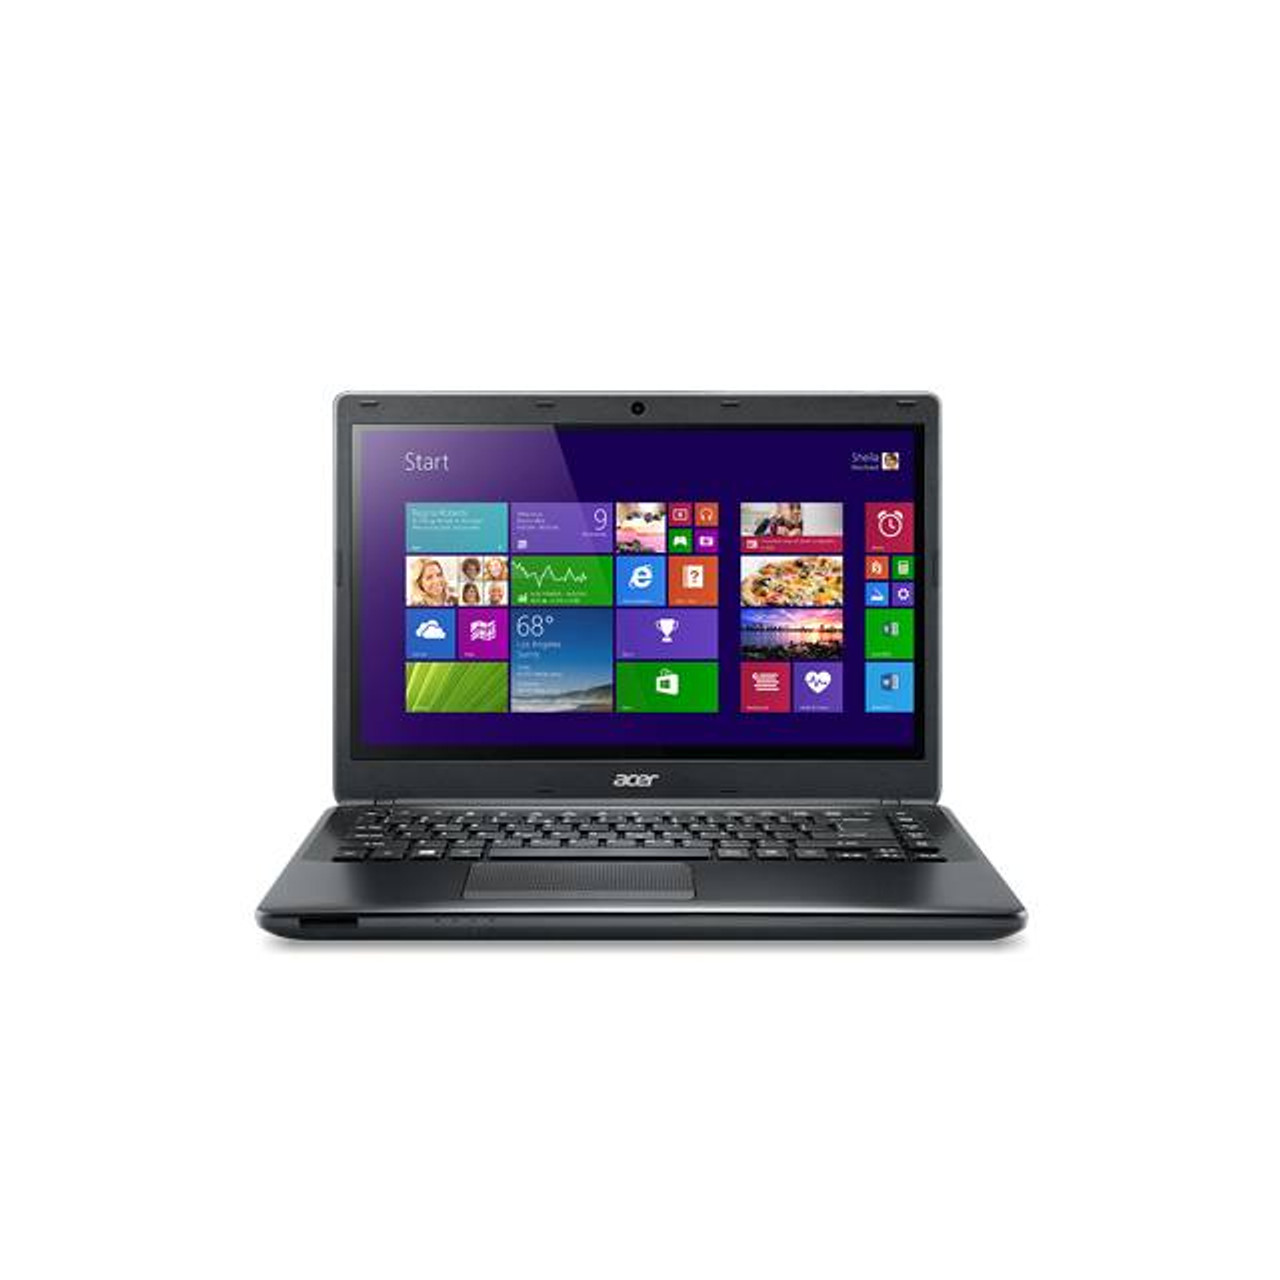 Acer TravelMate P2 TMP245-M-3446 14.0 inch Touchscreen Intel Core i3-4010U 1.7GHz/ 4GB DDR3L/ 500GB HDD/ DVD±RW/ USB3.0/ Windows 8.1 Pro Notebook (Black)